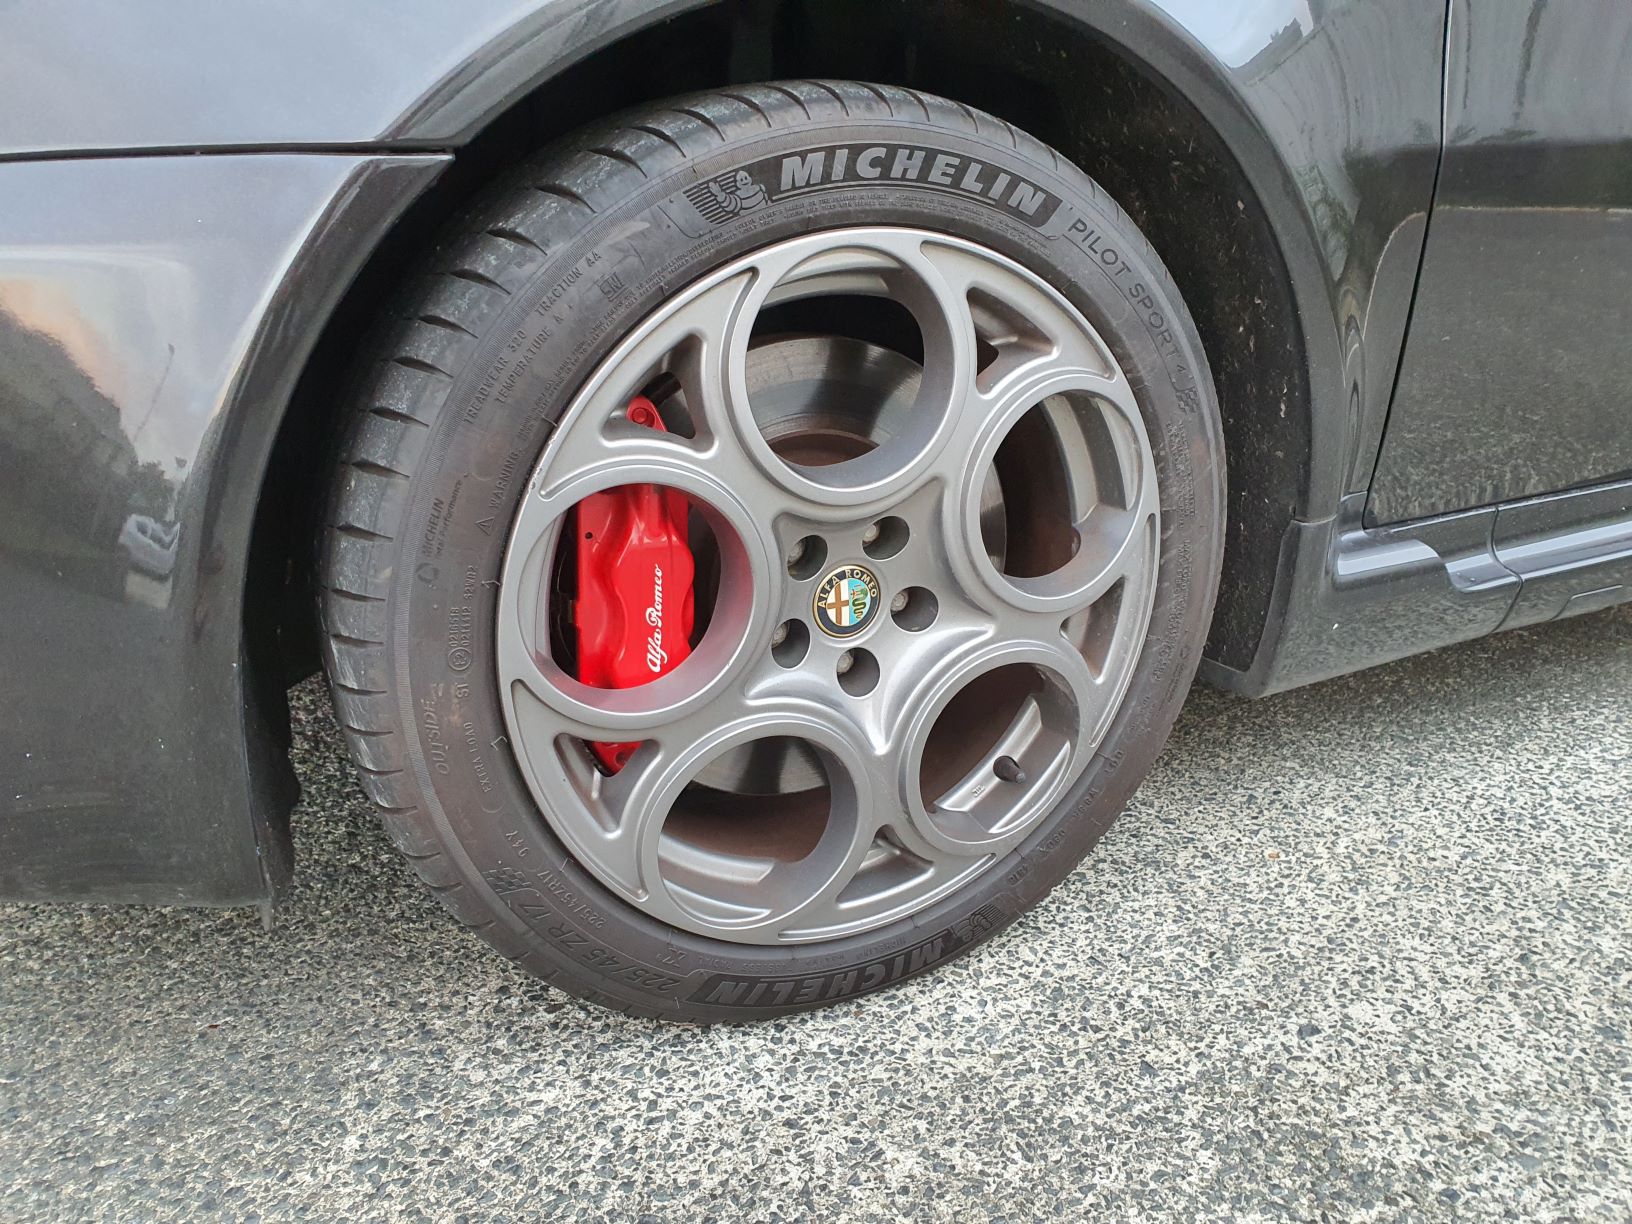 The Alfa Romeo Teledial wheels